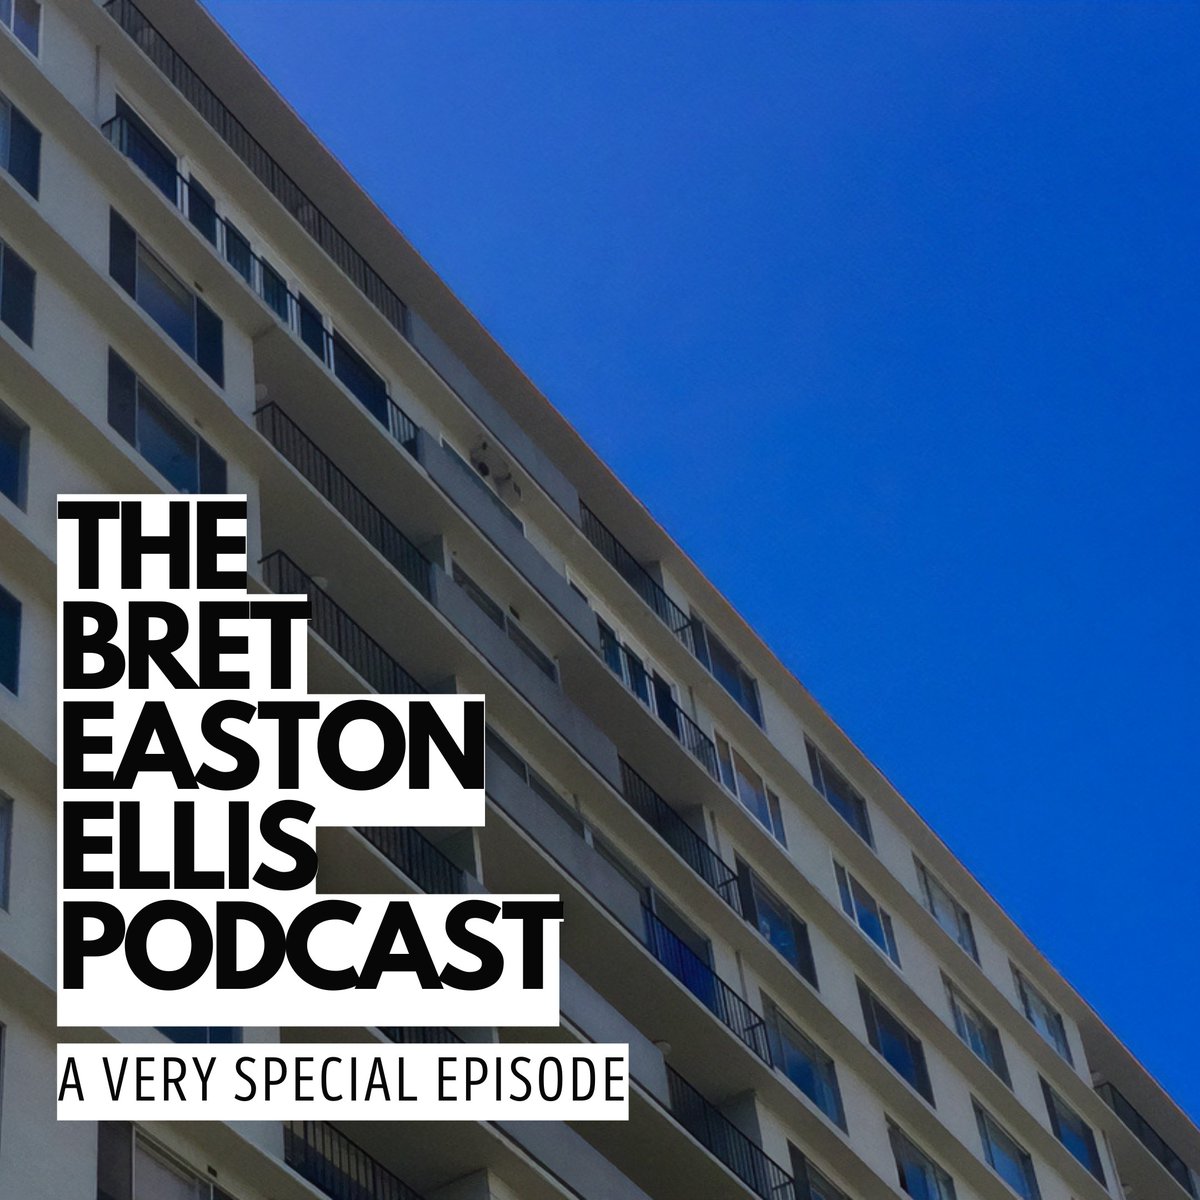 The Bret Easton Ellis Podcast - Season 8, Episode 6 - A Very Special Episode. bit.ly/beeps8e6